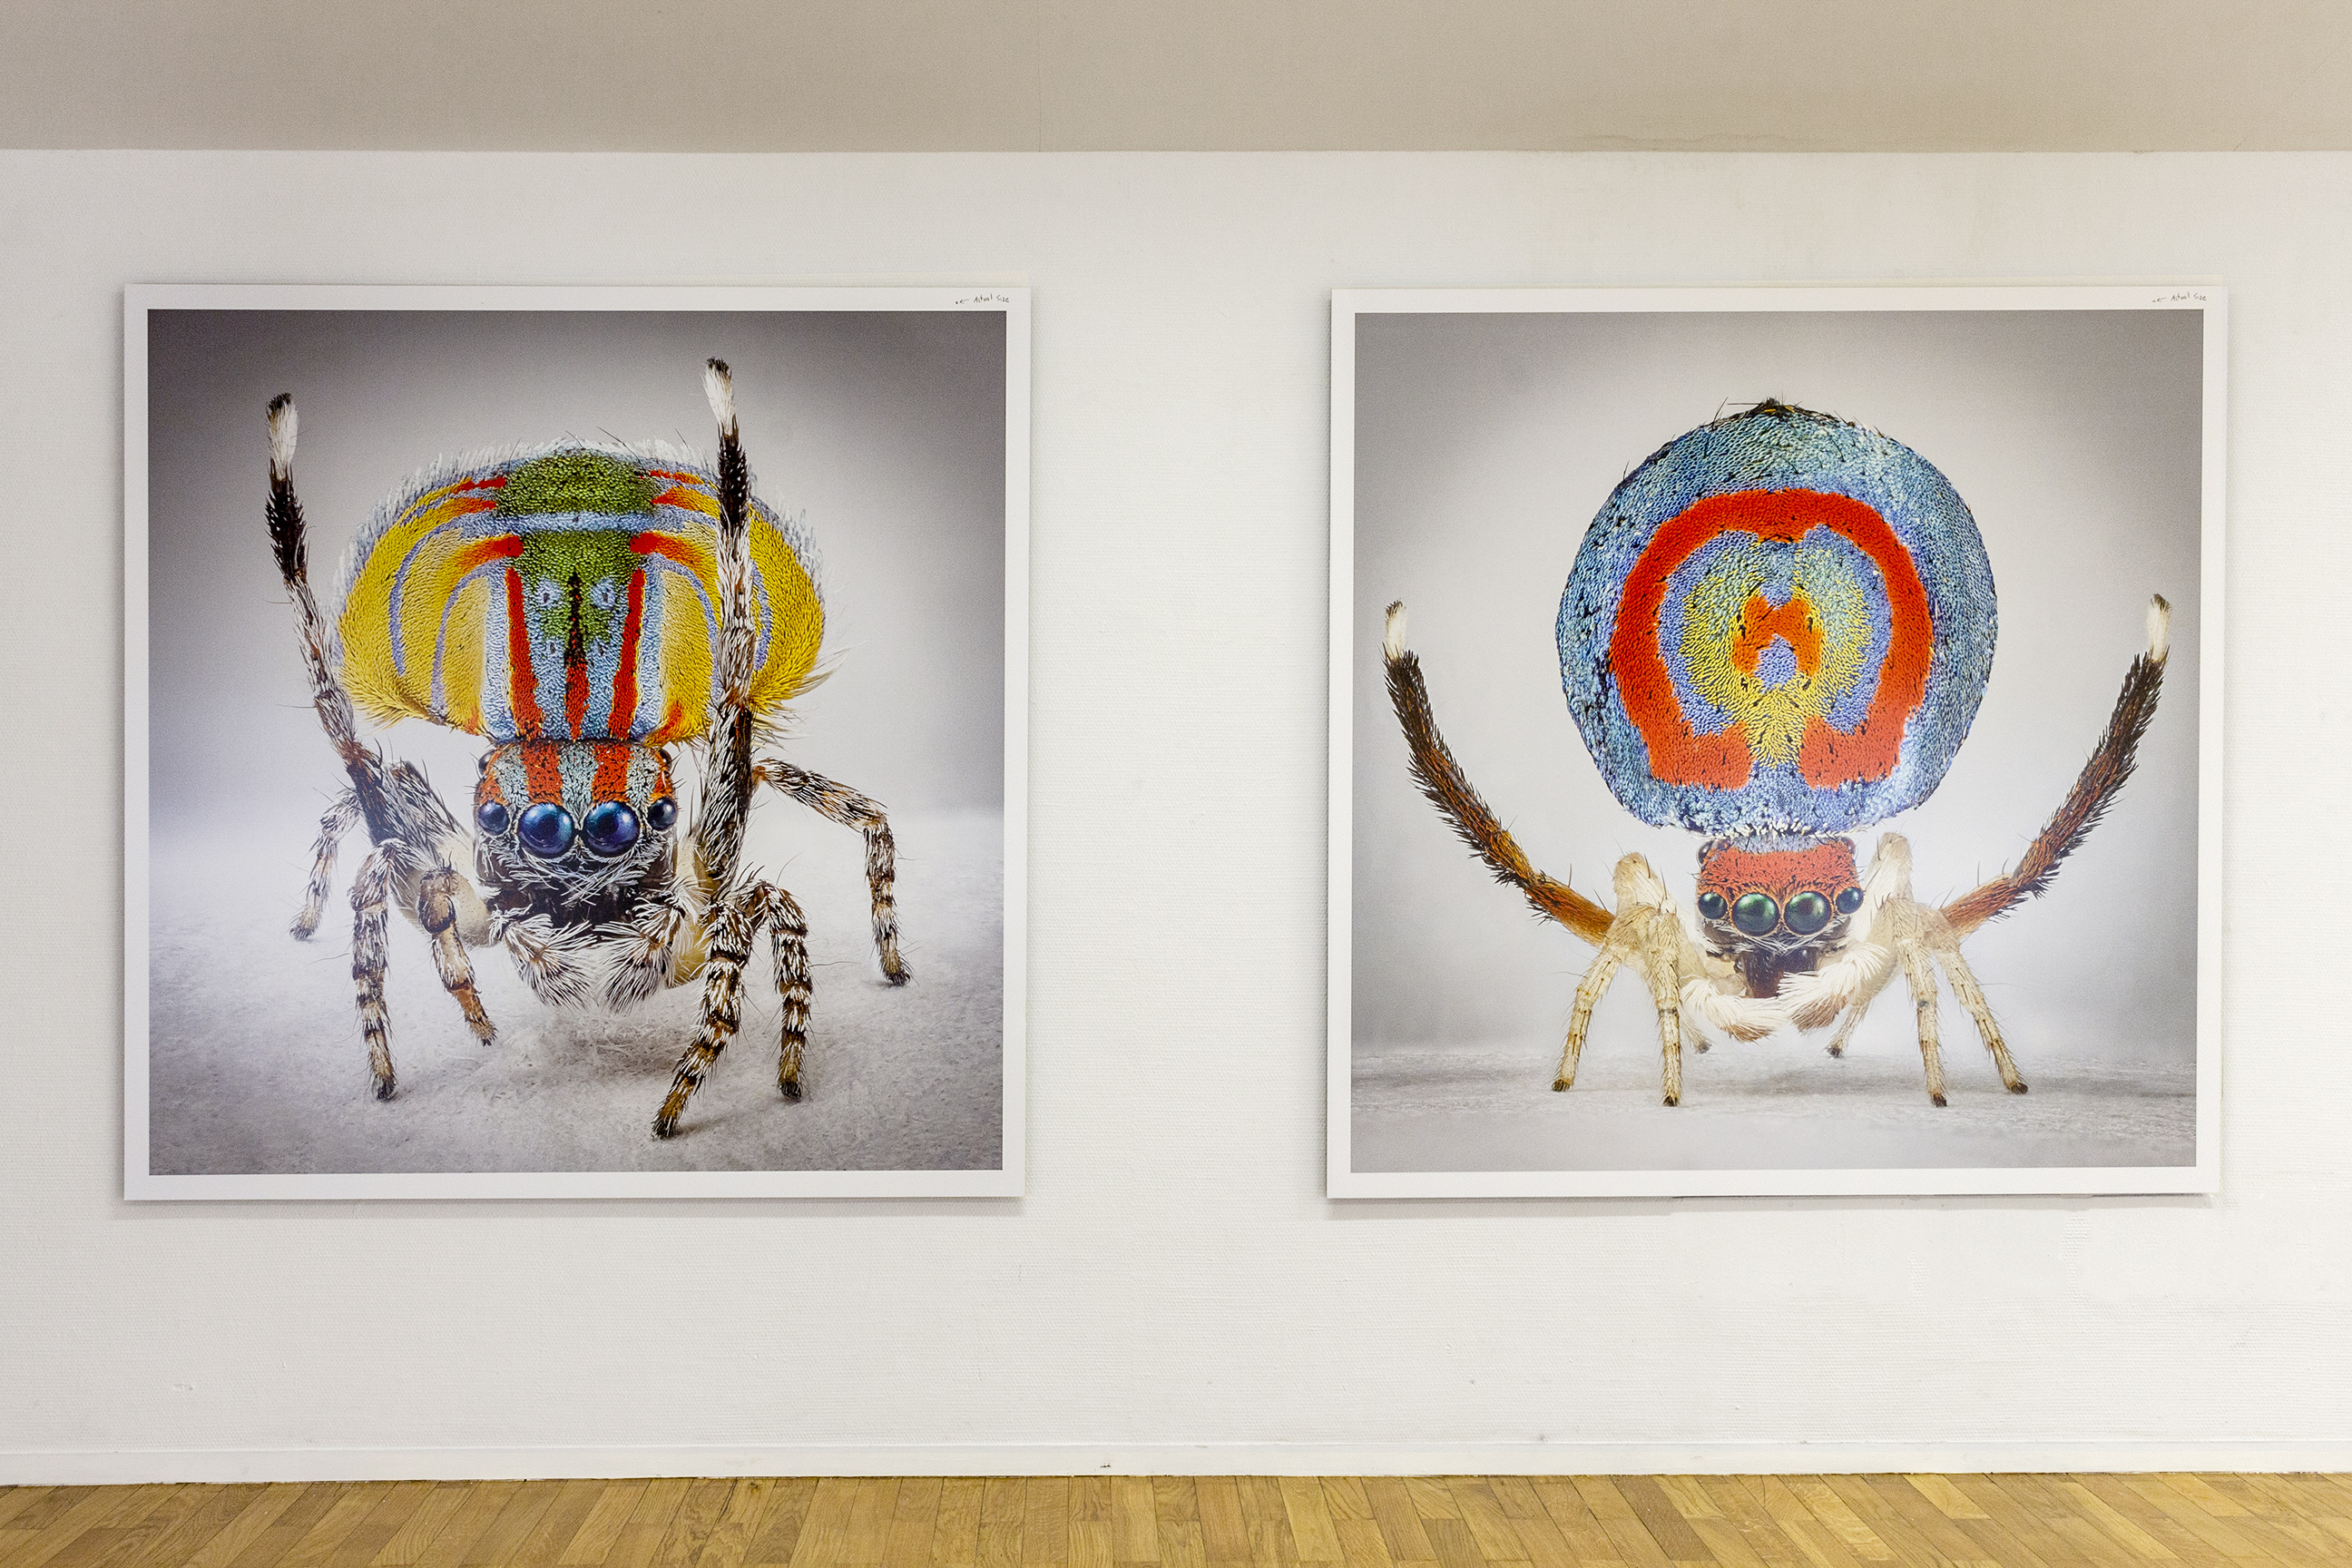 Maria Fernanda Cardoso, Spiders of Paradise: Maratus speciosus from the Actual Size Series, 2018. Installation view at PAC Milano, 2019. Photo Claudia Capelli